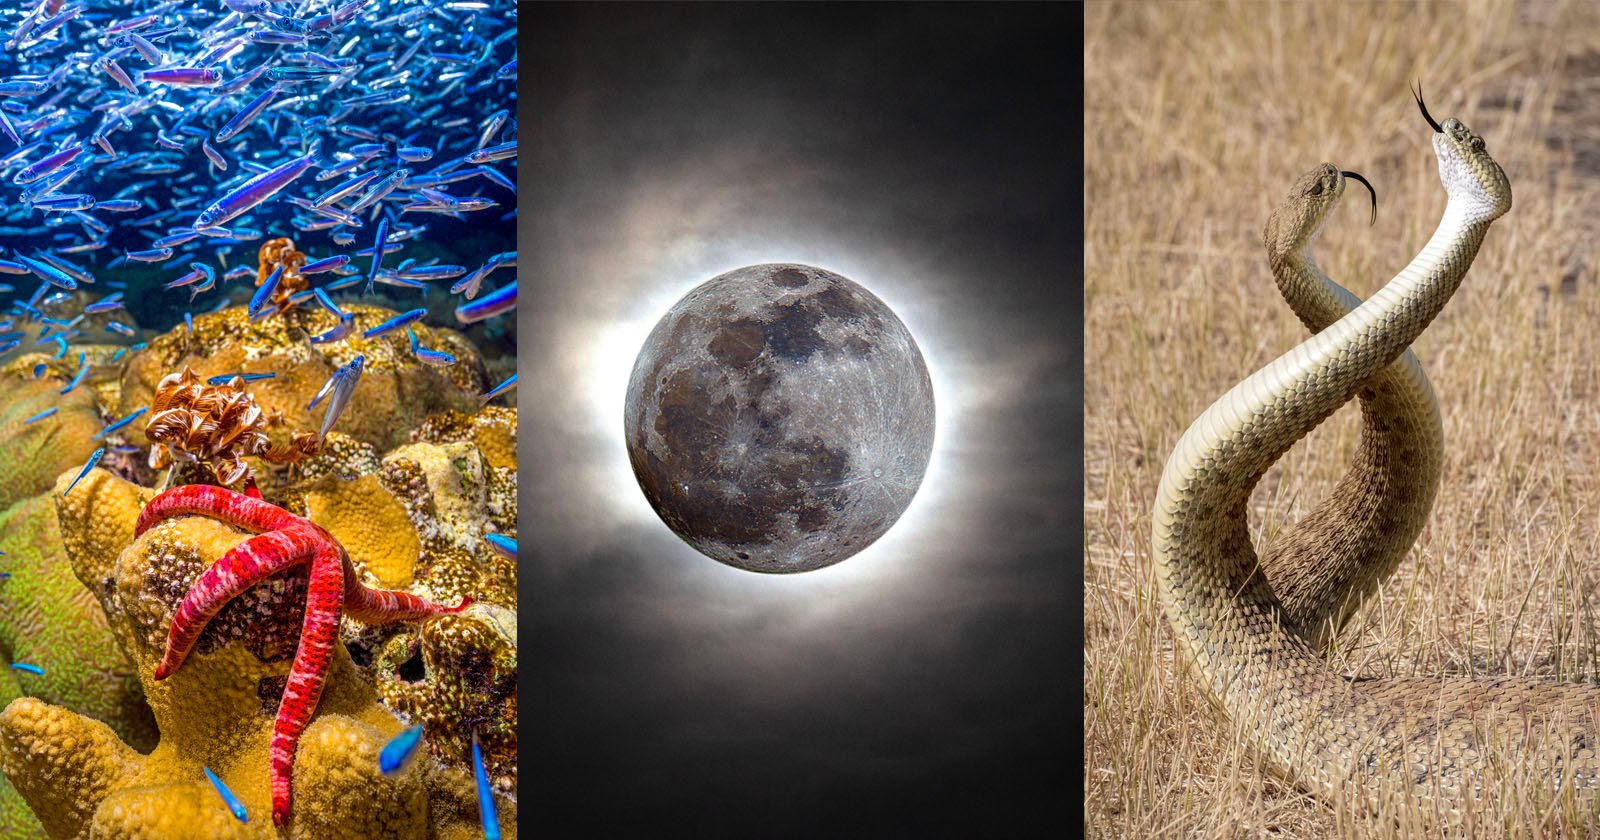  photo contest celebrates scientific wonders earth 